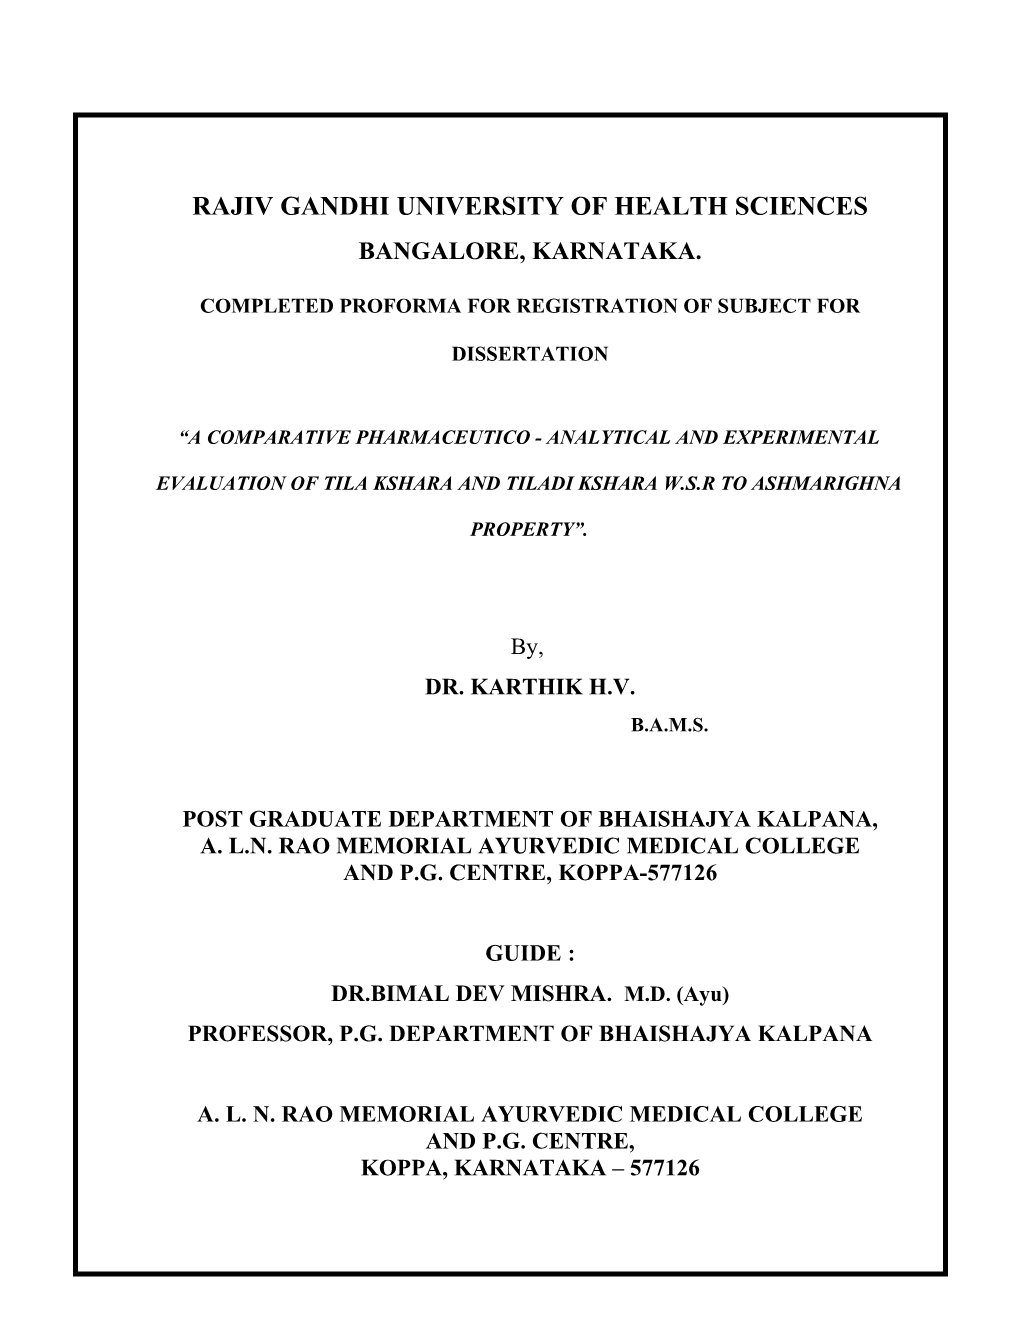 Raghiv Gandhi University of Health Sciences